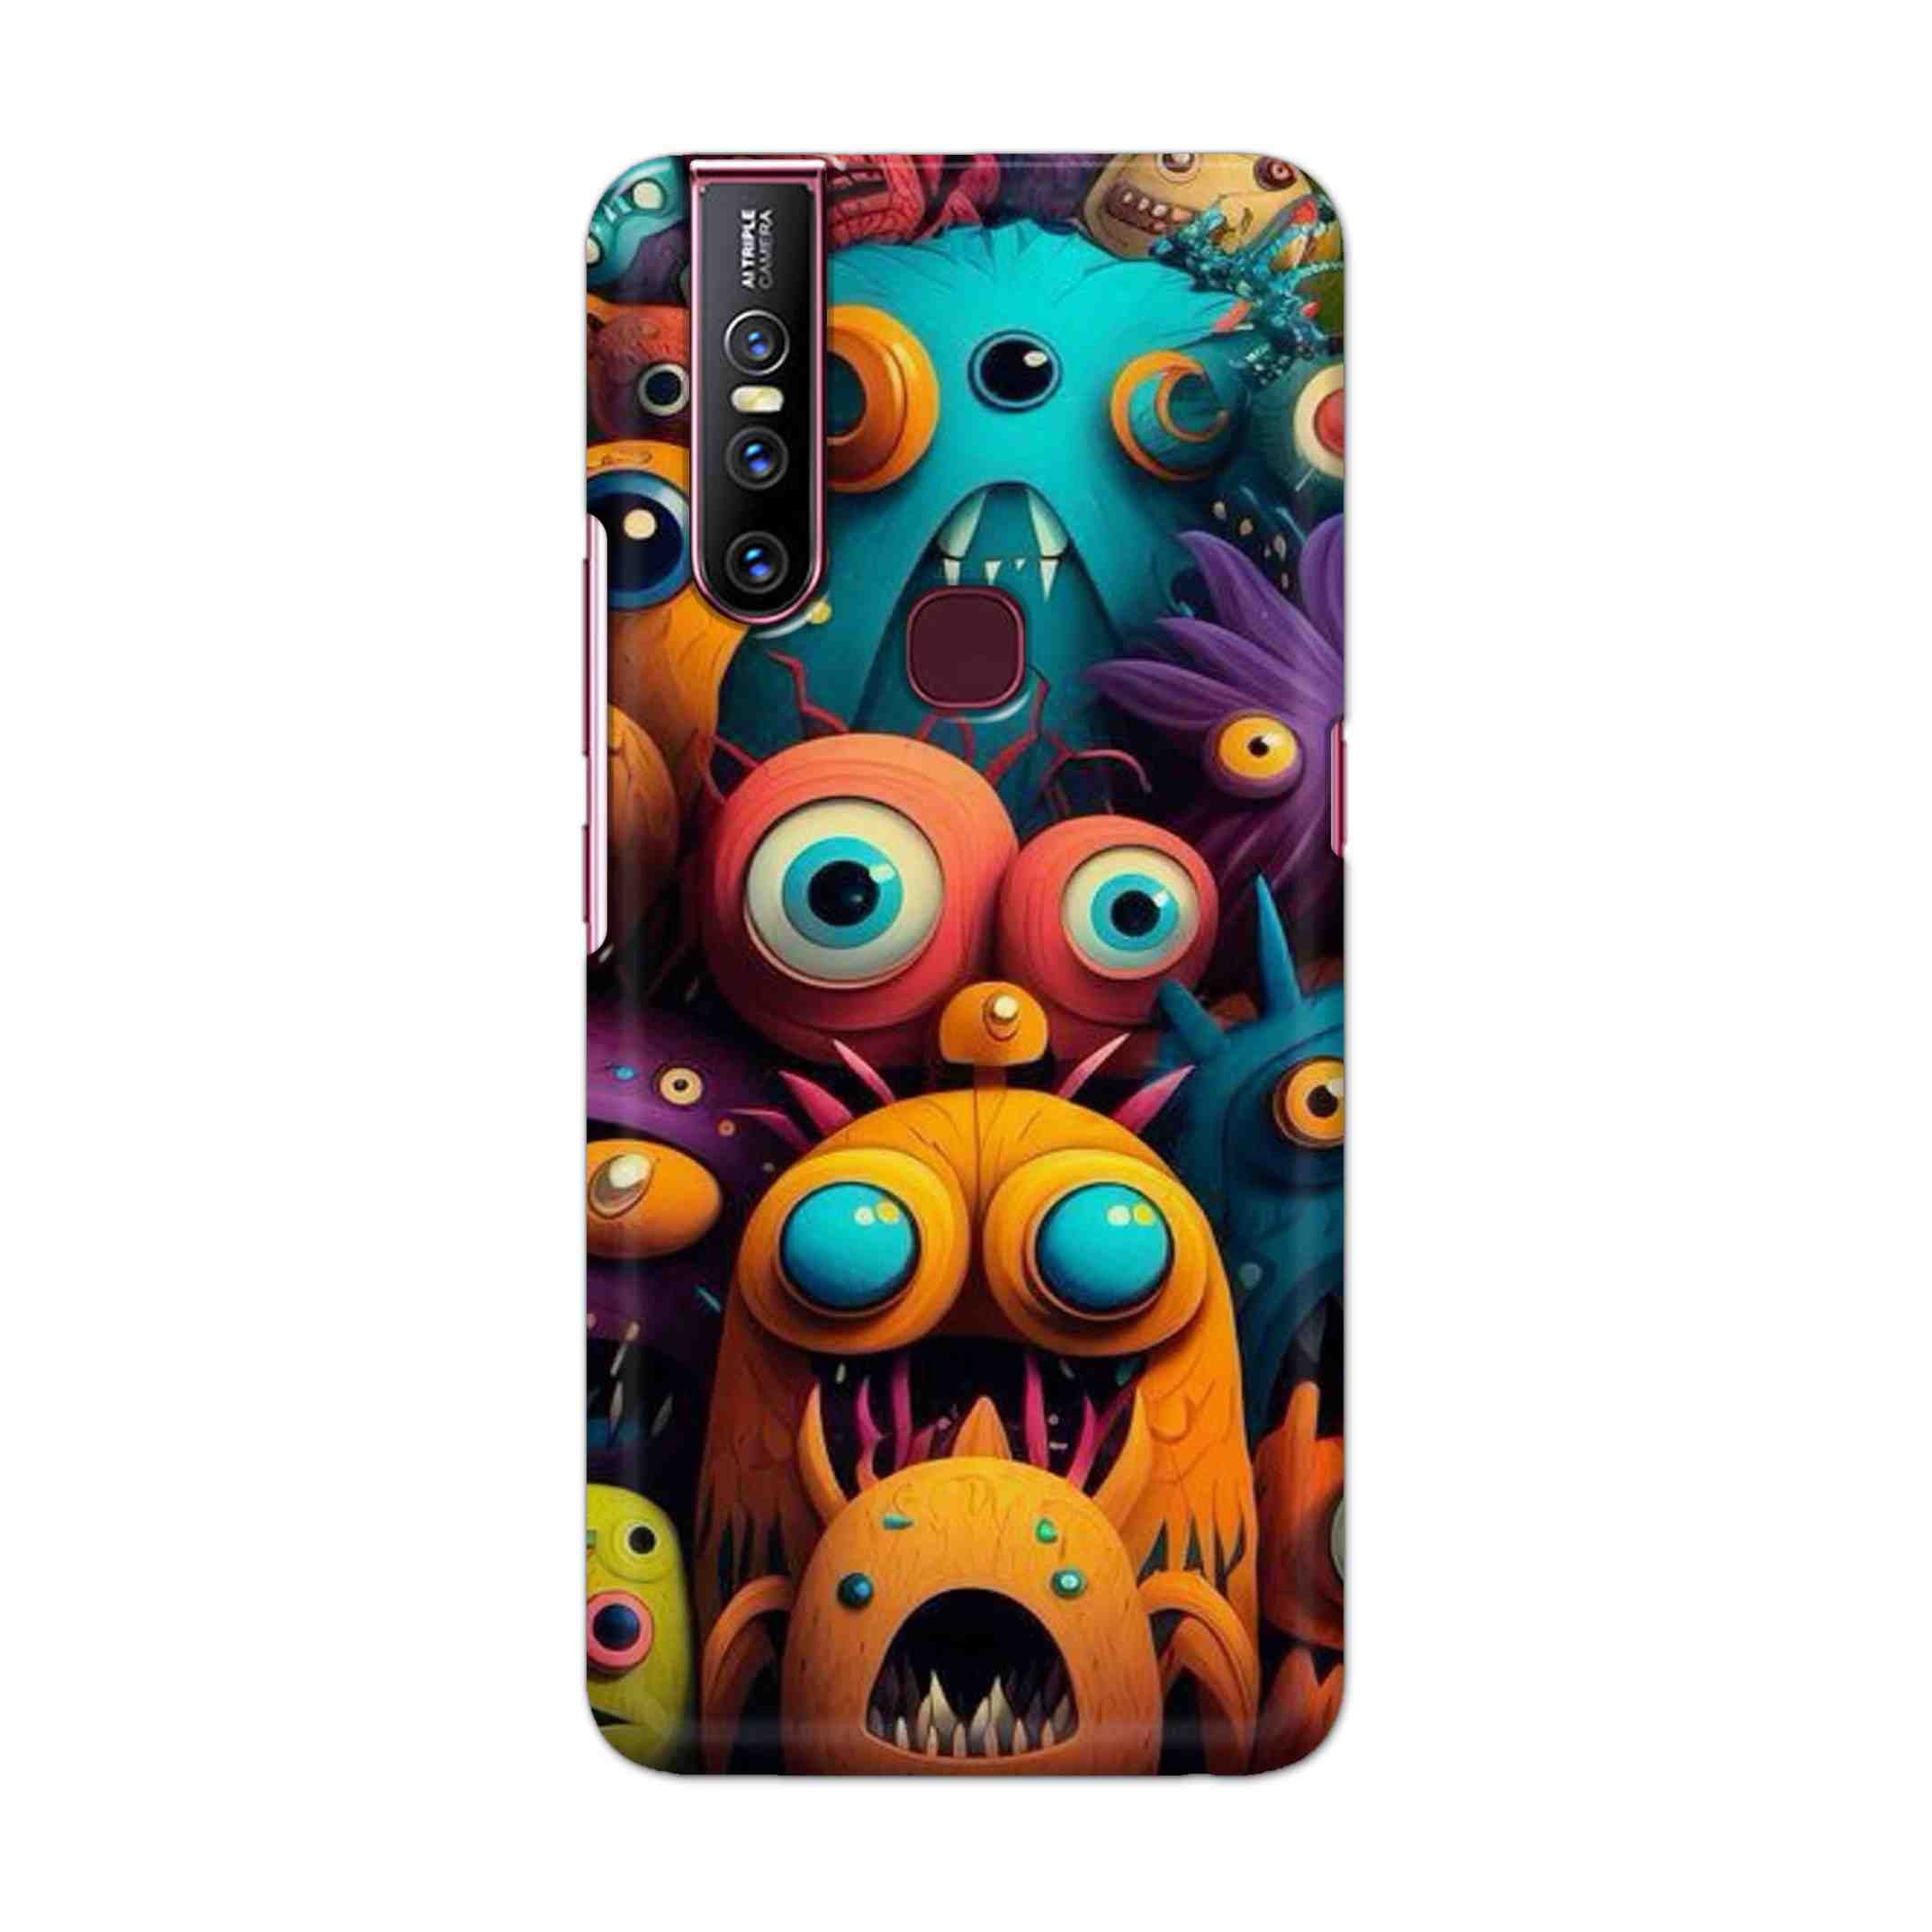 Buy Zombie Hard Back Mobile Phone Case Cover For Vivo V15 Online